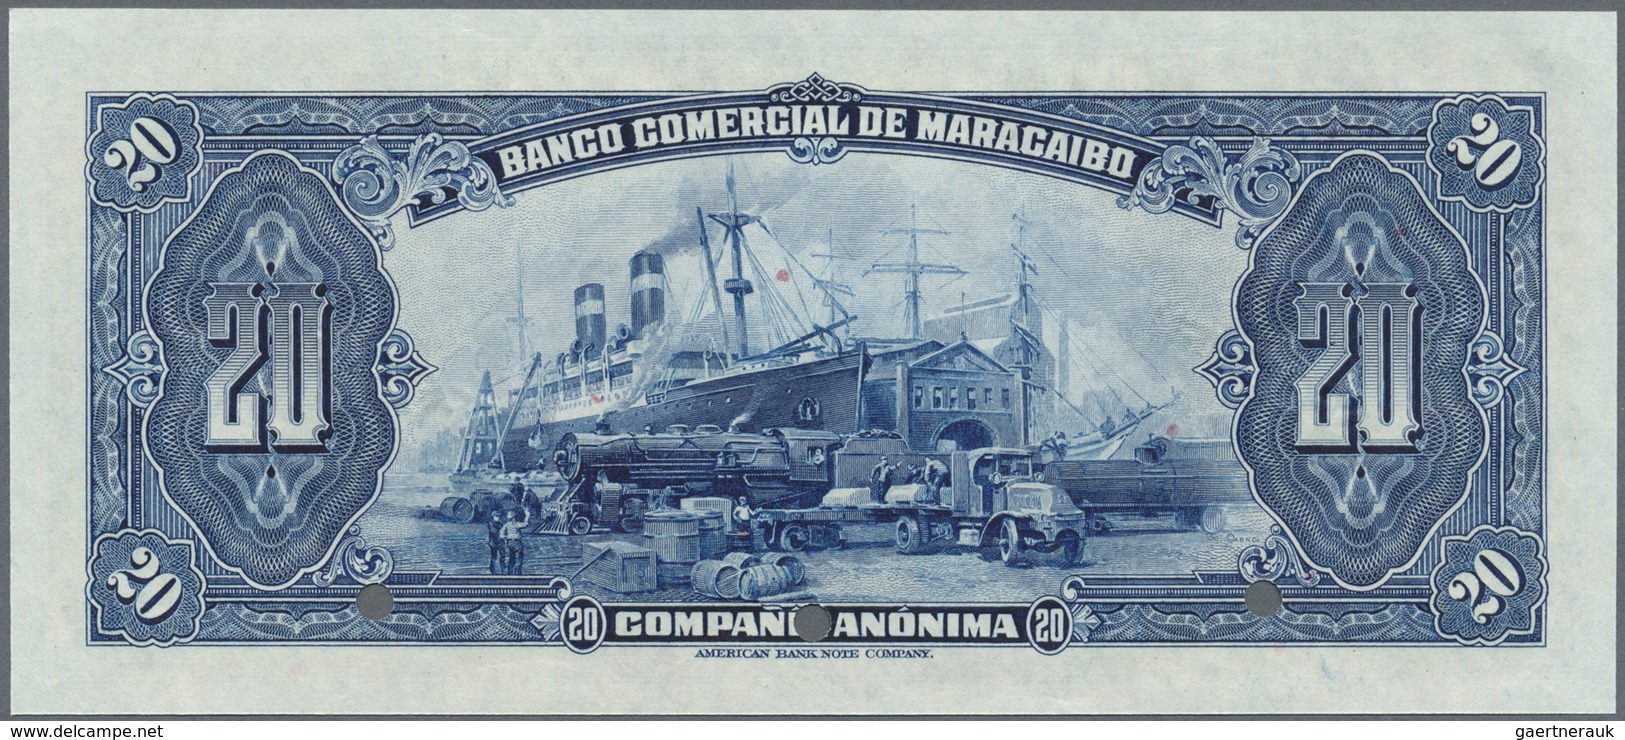 Venezuela: Banco Comercial De Maracaibo 20 Bolivares Specimen Without Signatures And Date (1929), P. - Venezuela